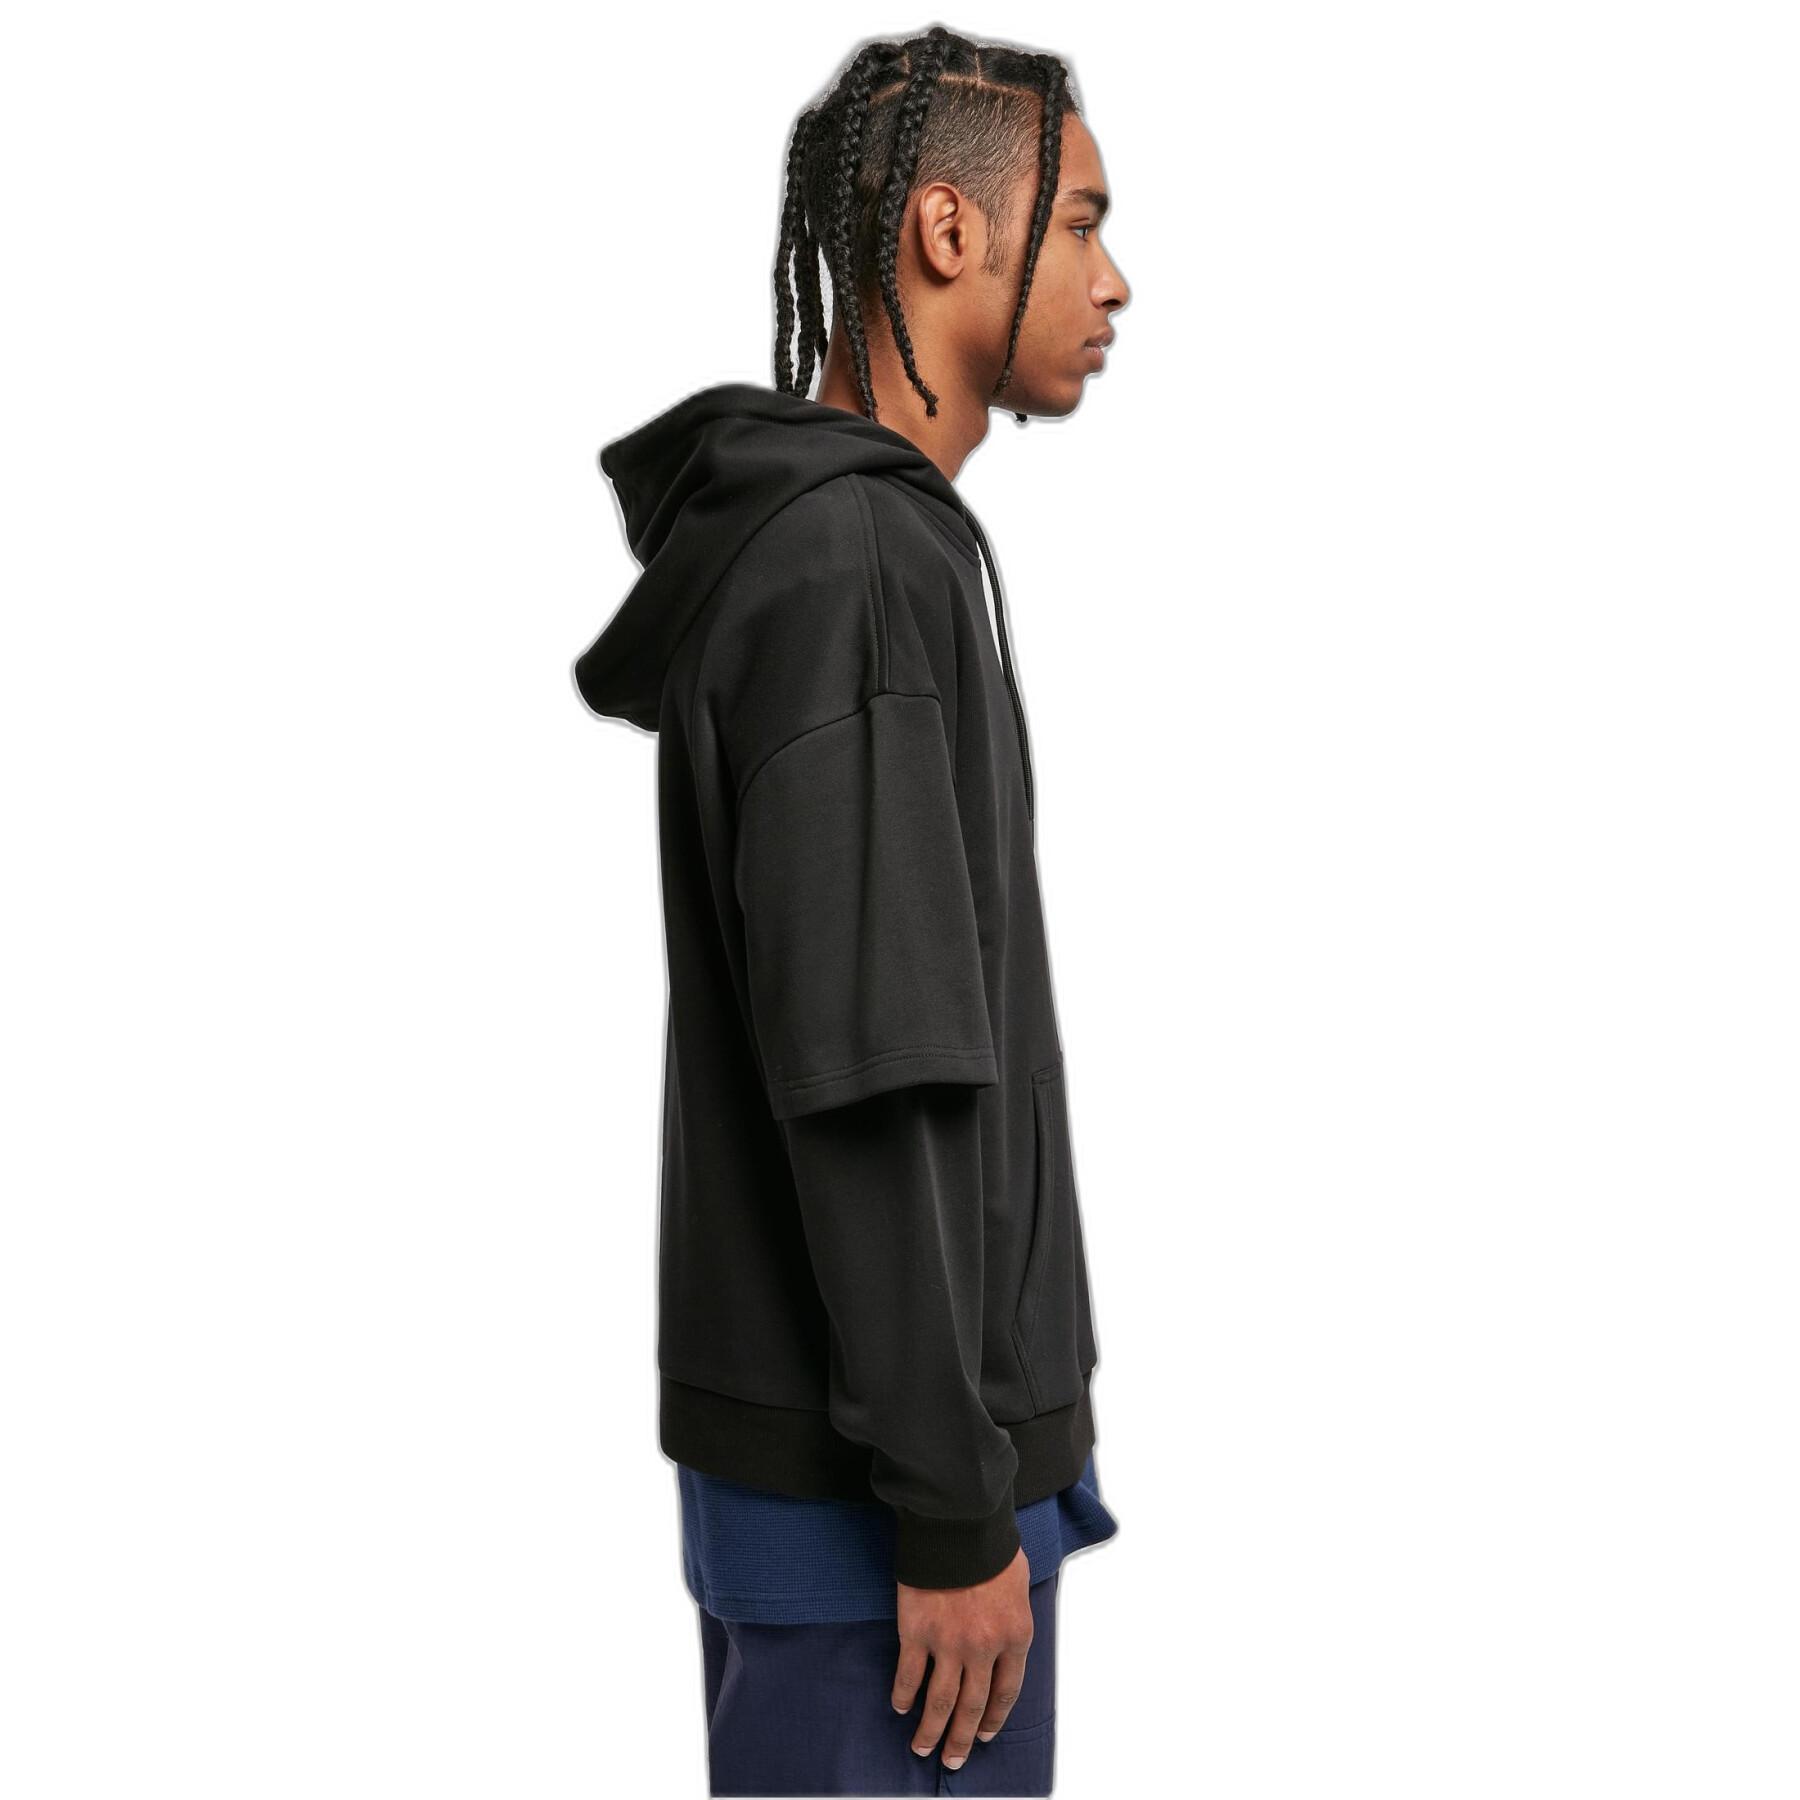 Double sleeve hoodie Urban Classics